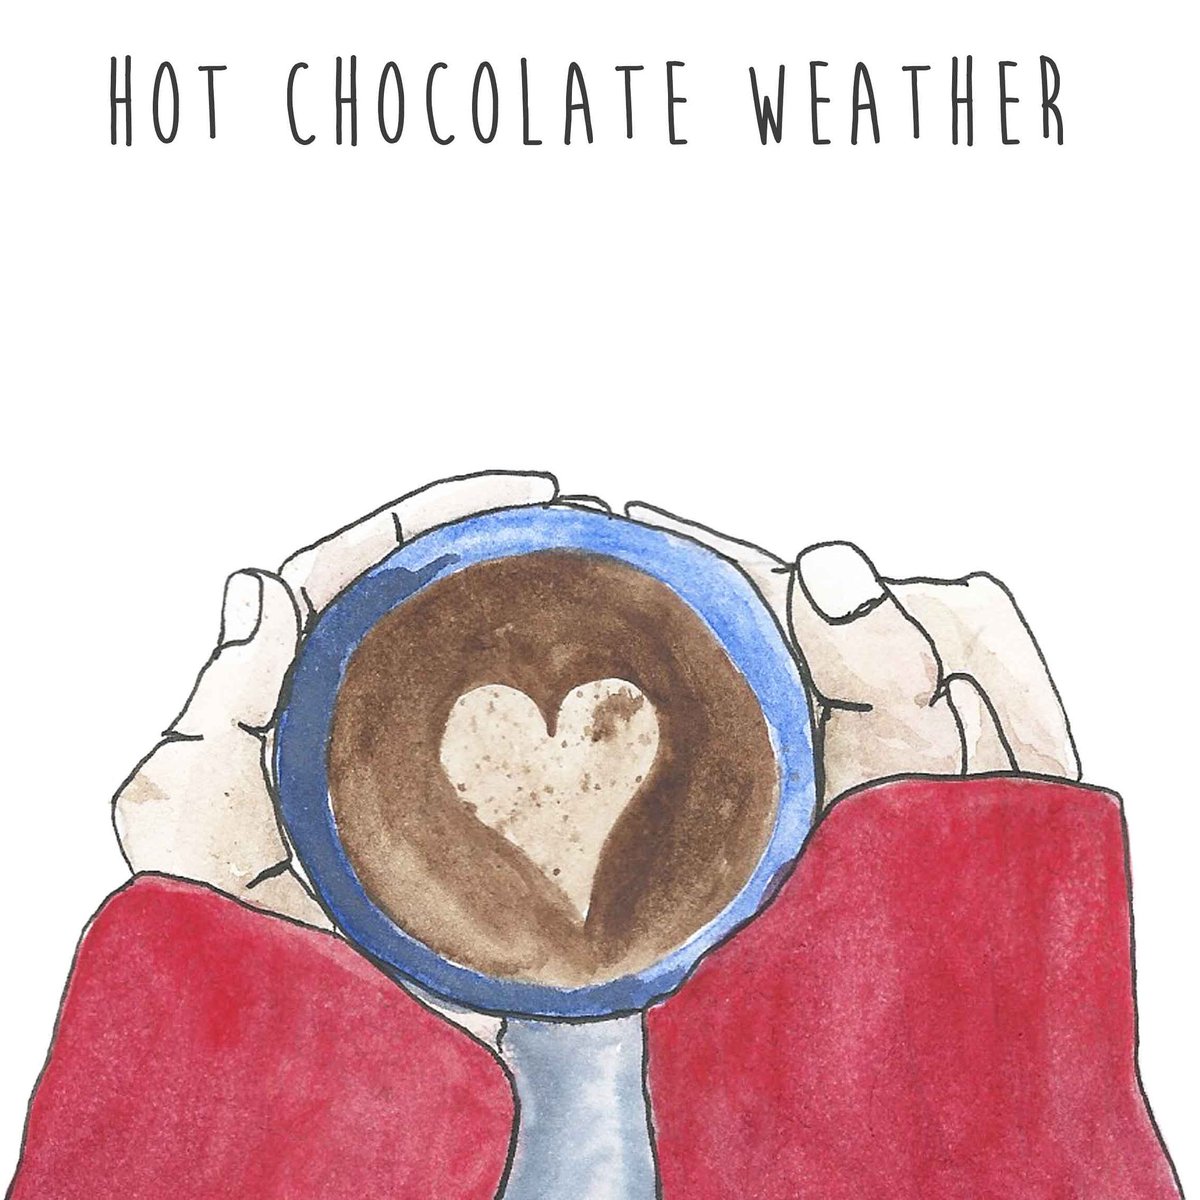 Hot chocolate weather has arrived! @pippaandpaper #christmascard #hotchocolateweatherishere #chocolate #christmasjumper #christmascard #snuggleup #autumn #knitwear #chorlton #manchester